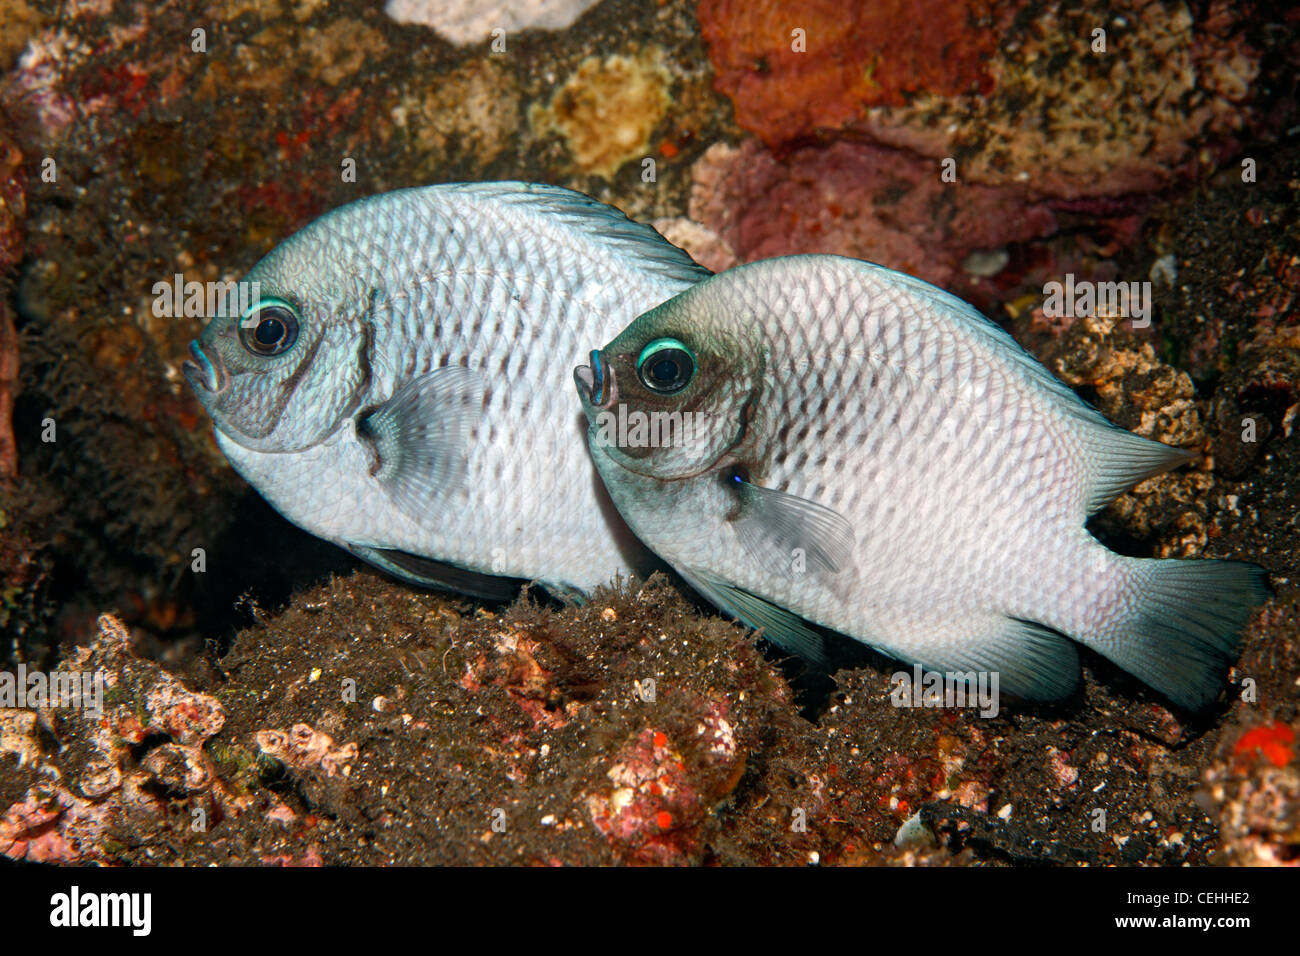 A pair of adult mating Three Spot Dascyllus, or Damselfish, Dascyllus trimaculatus. Also known as Domino Damselfish. Stock Photo